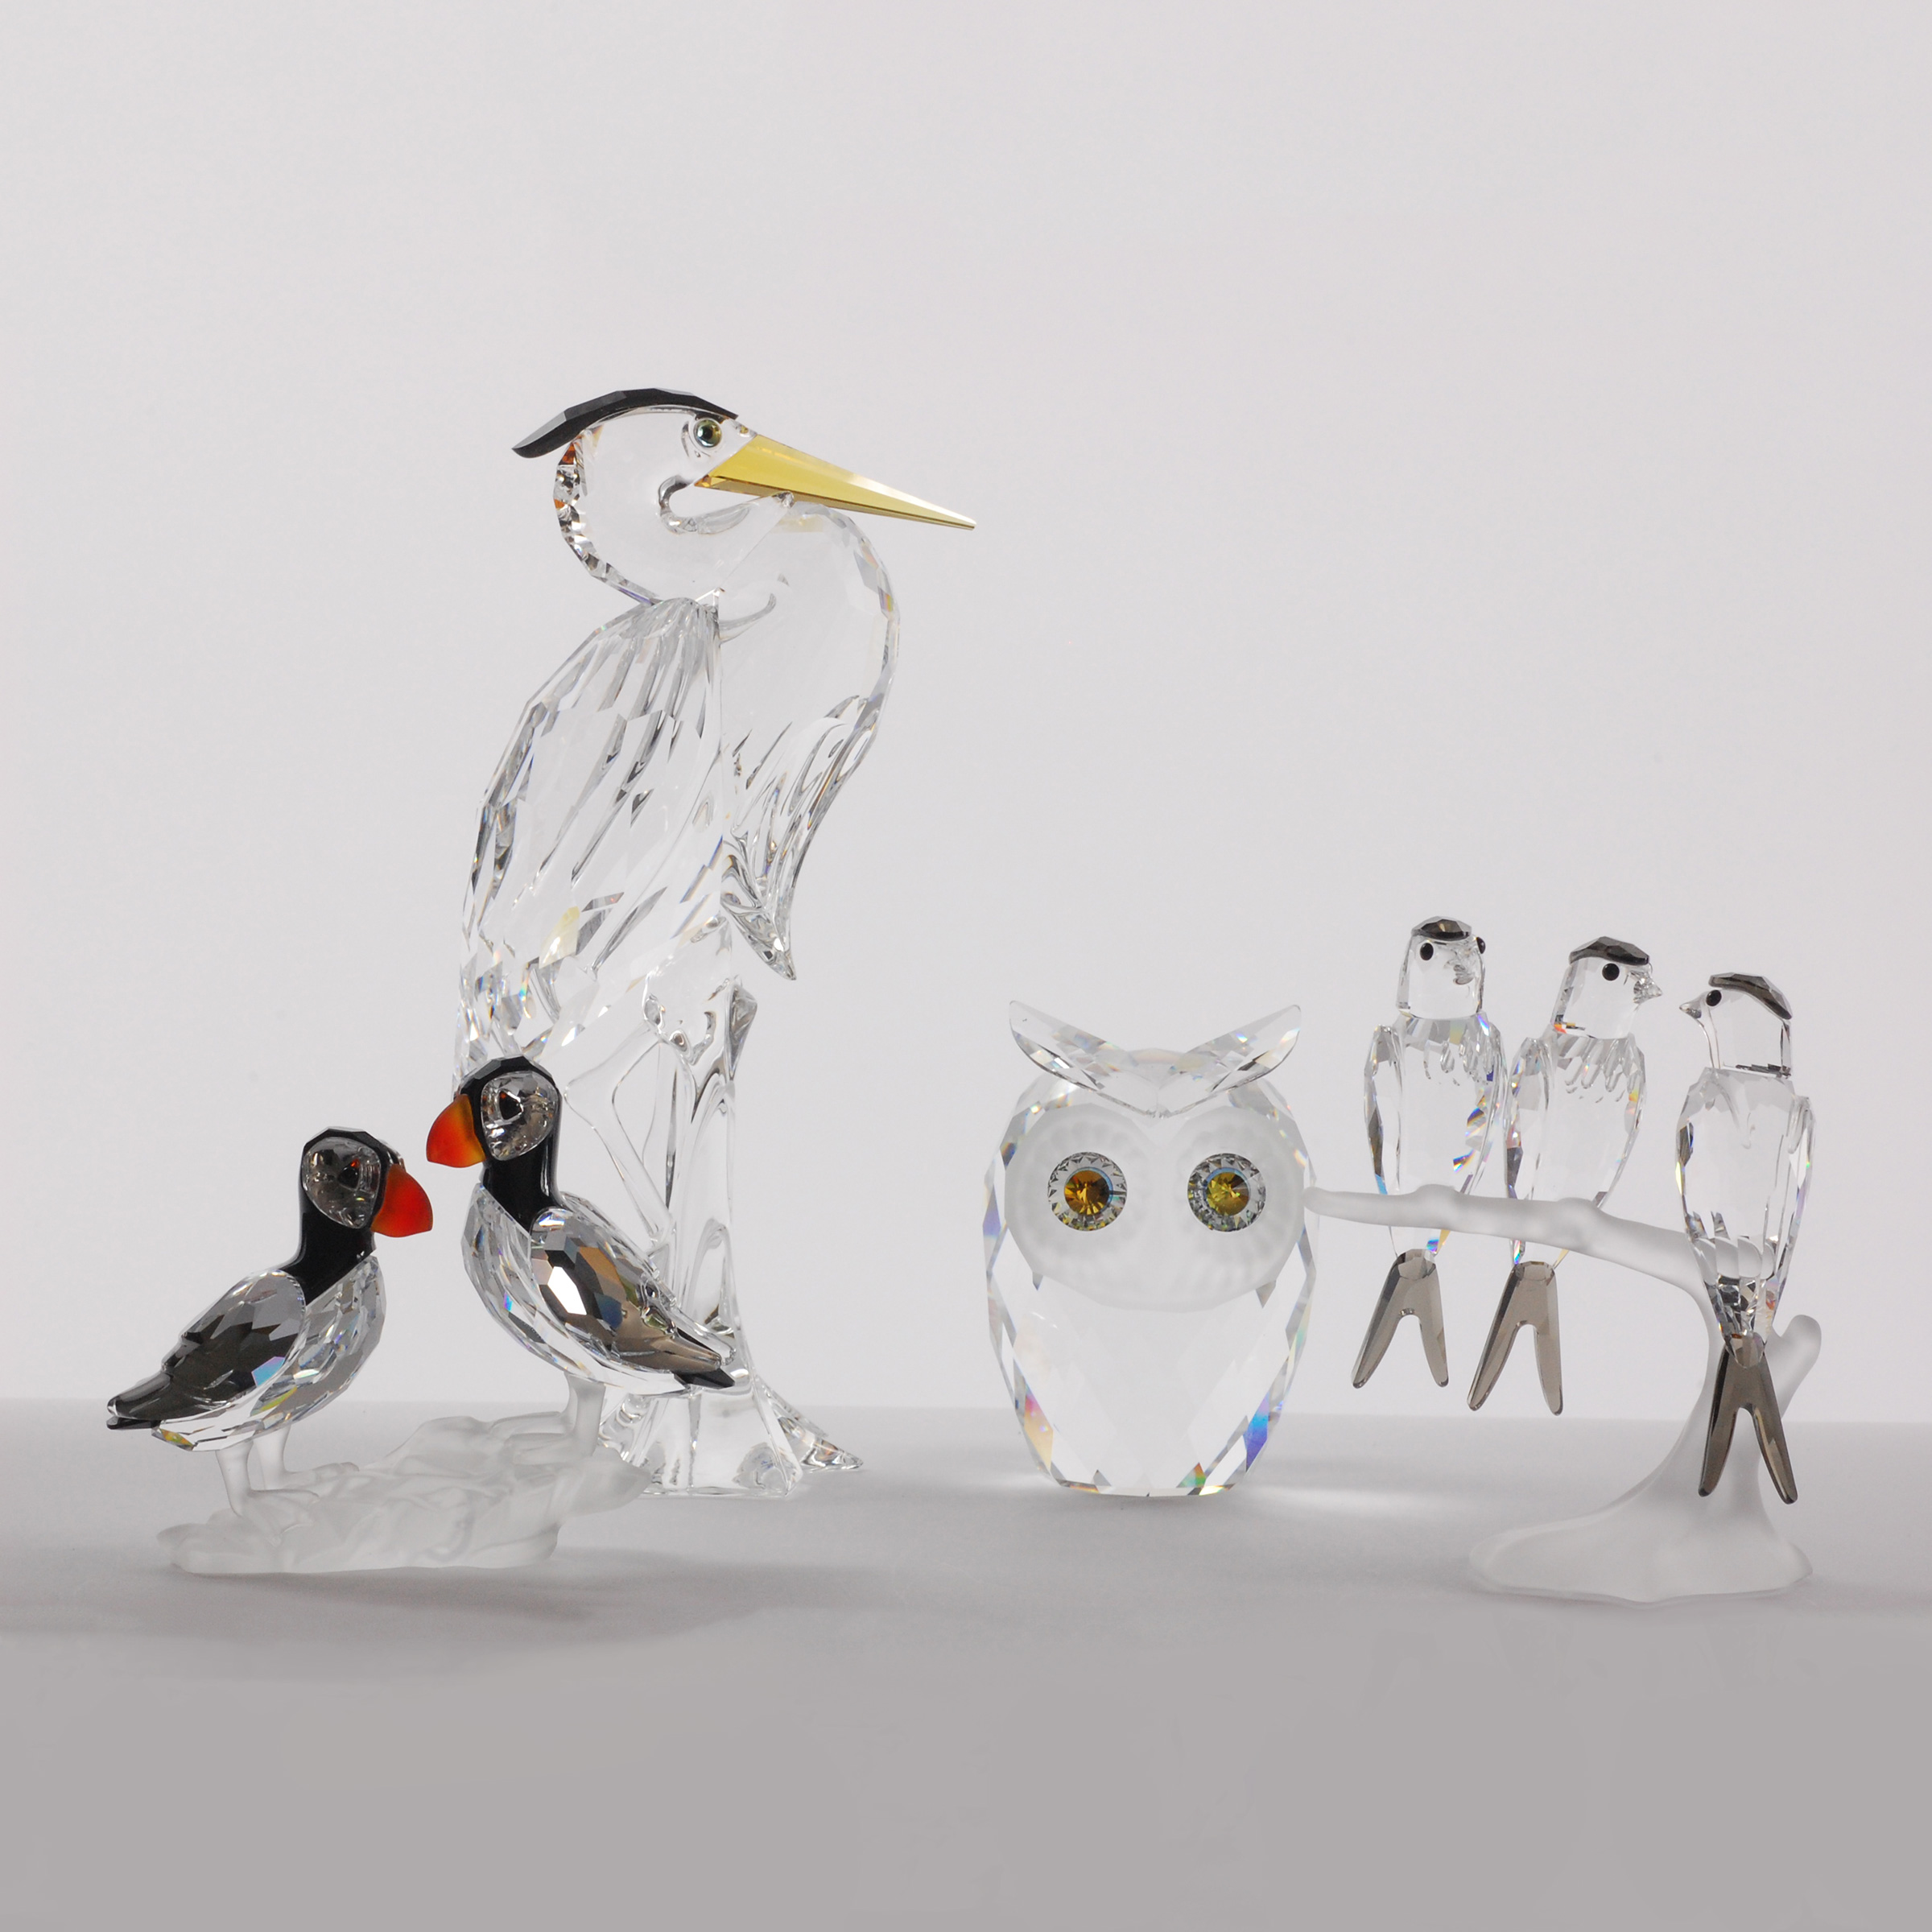 Four Swarovski Crystal Bird Figurines, late 20th/early 21st century